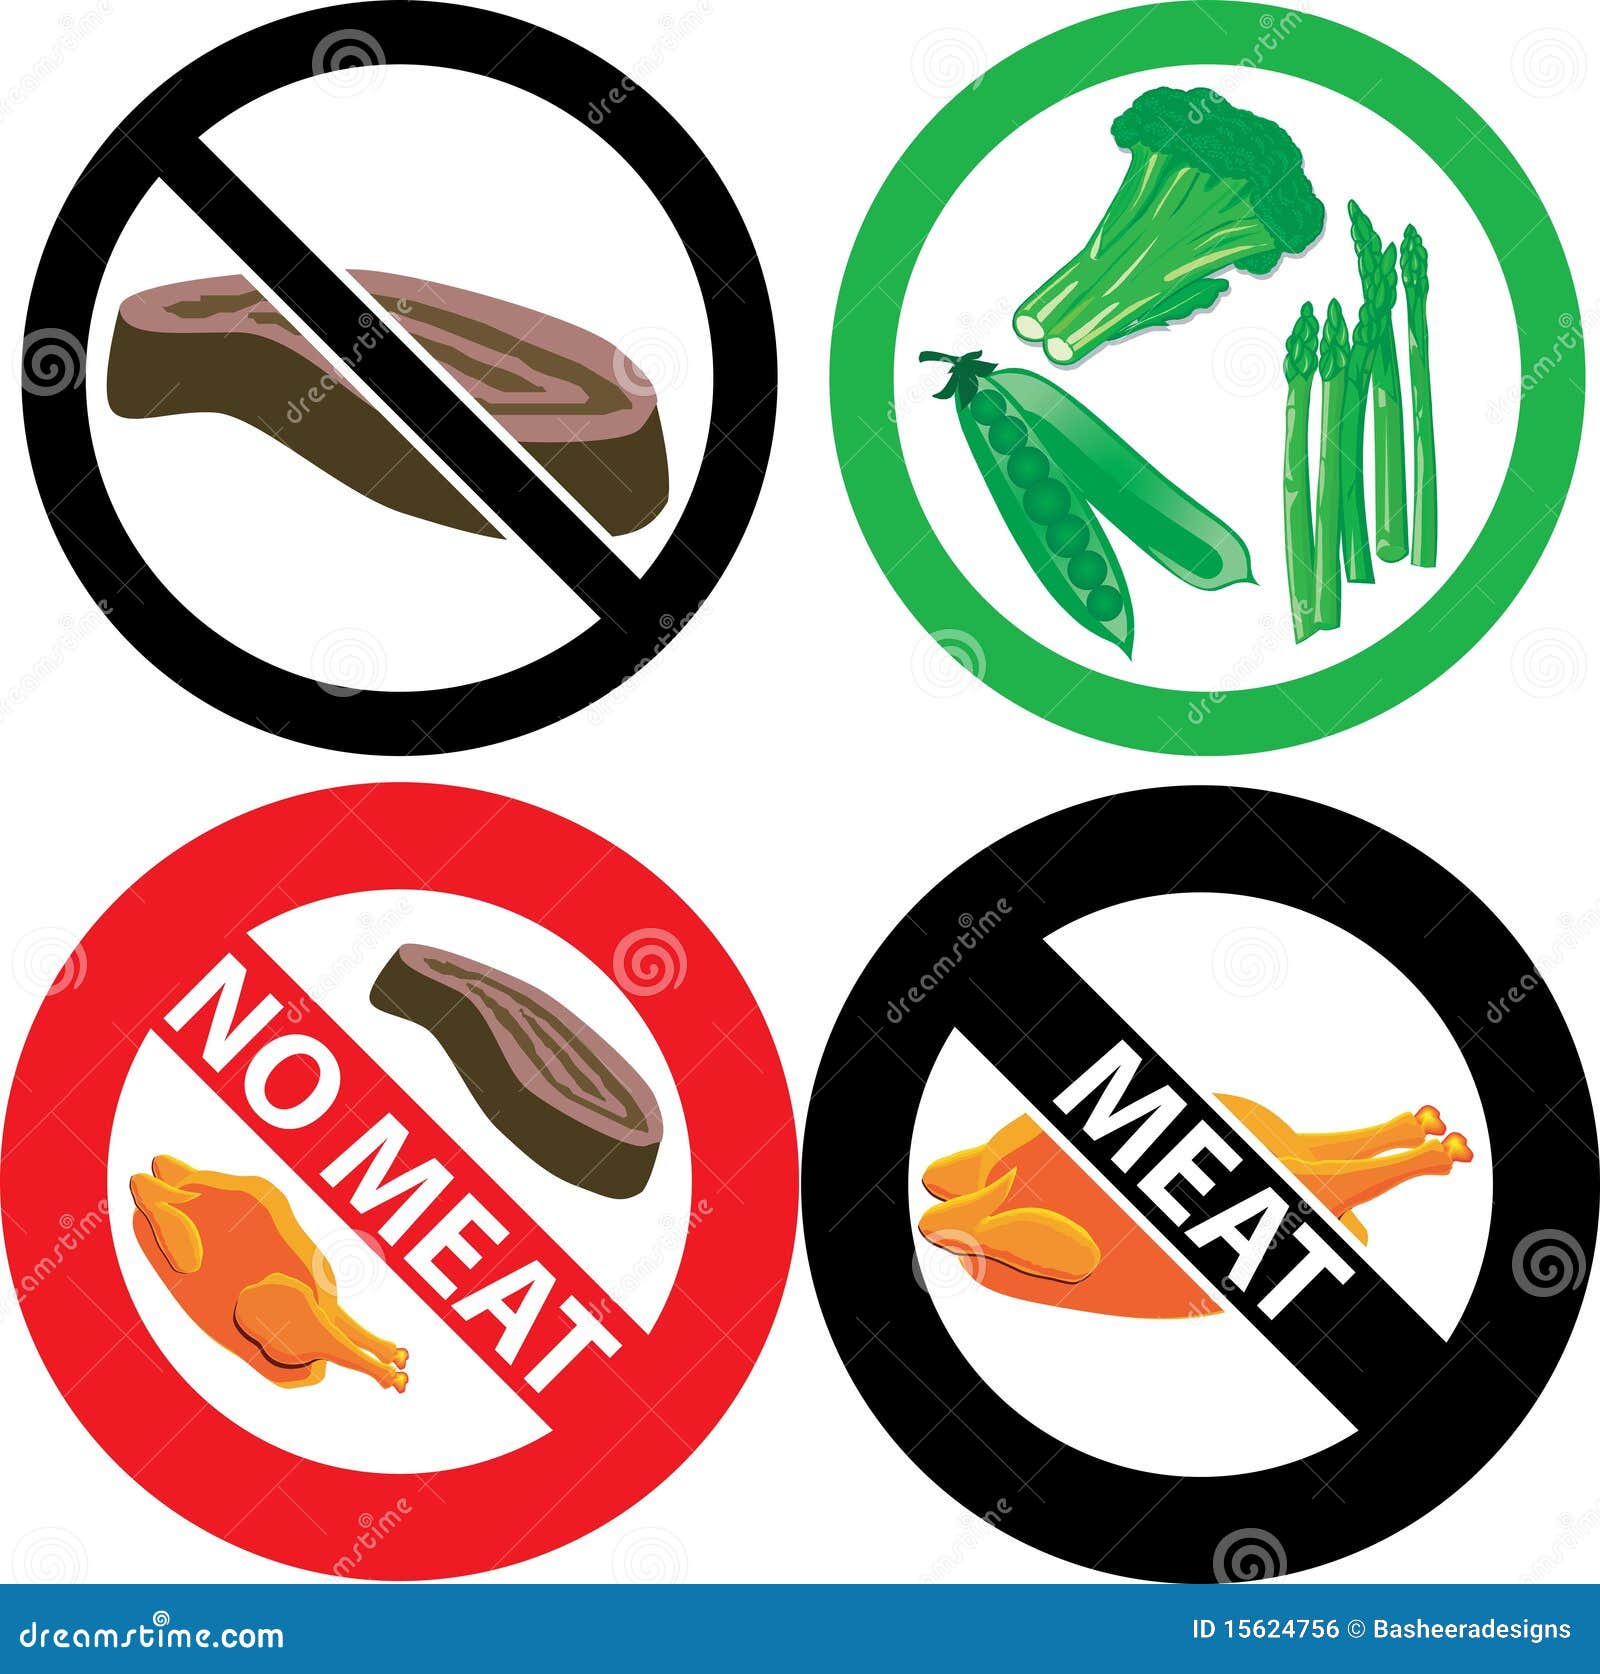 Мясо есть запретят. Знак нет мяса.